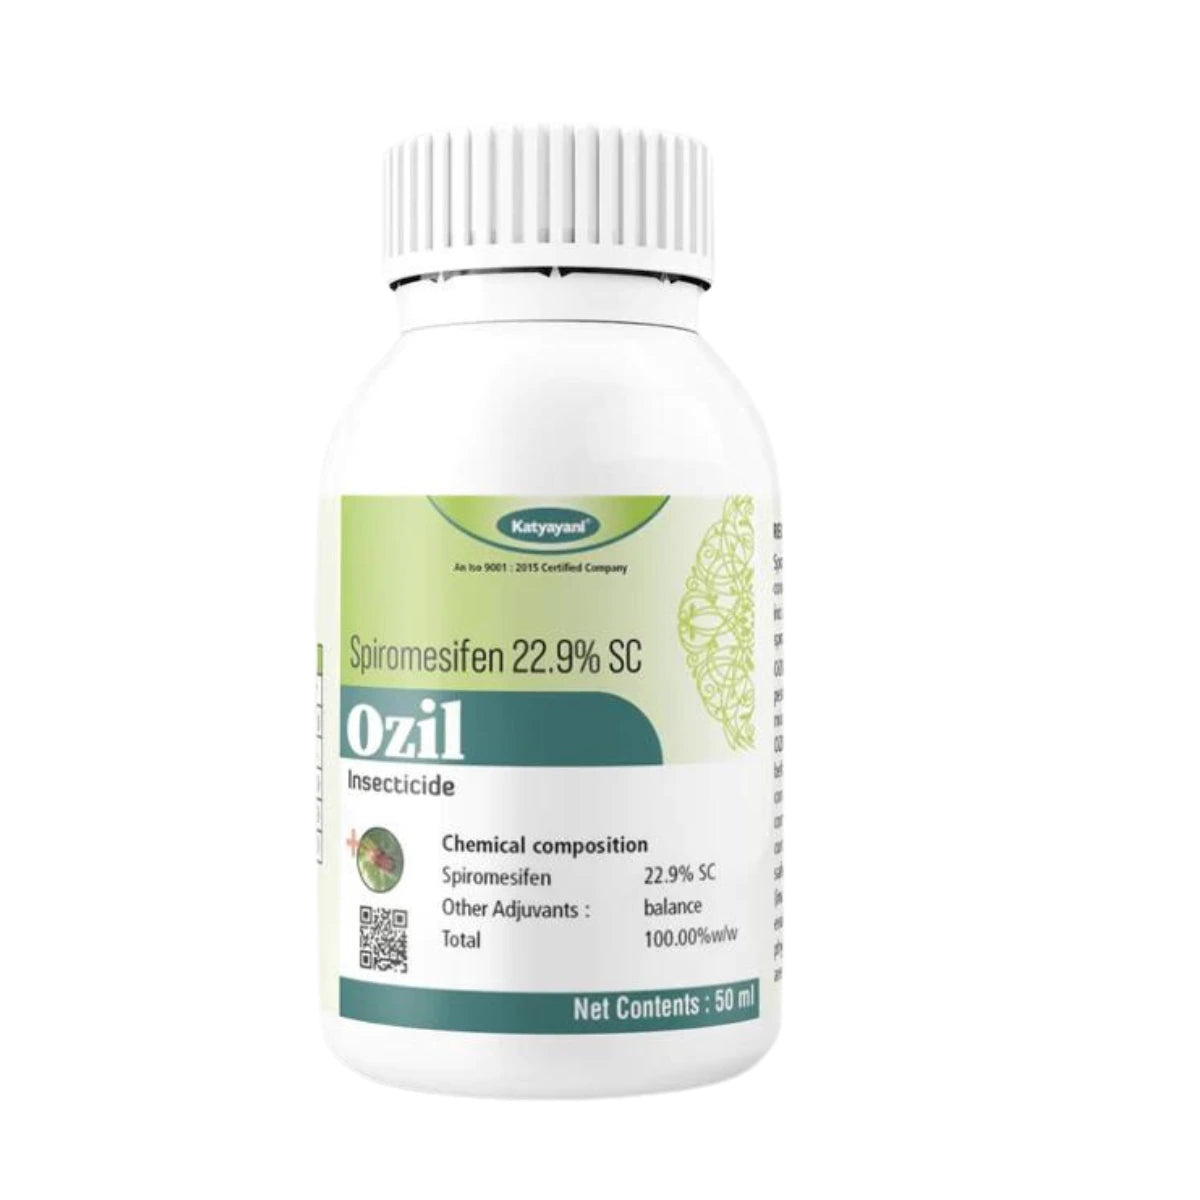 KATYAYANI OZIL (Spiromesifen 22.9% SC) Insecticide